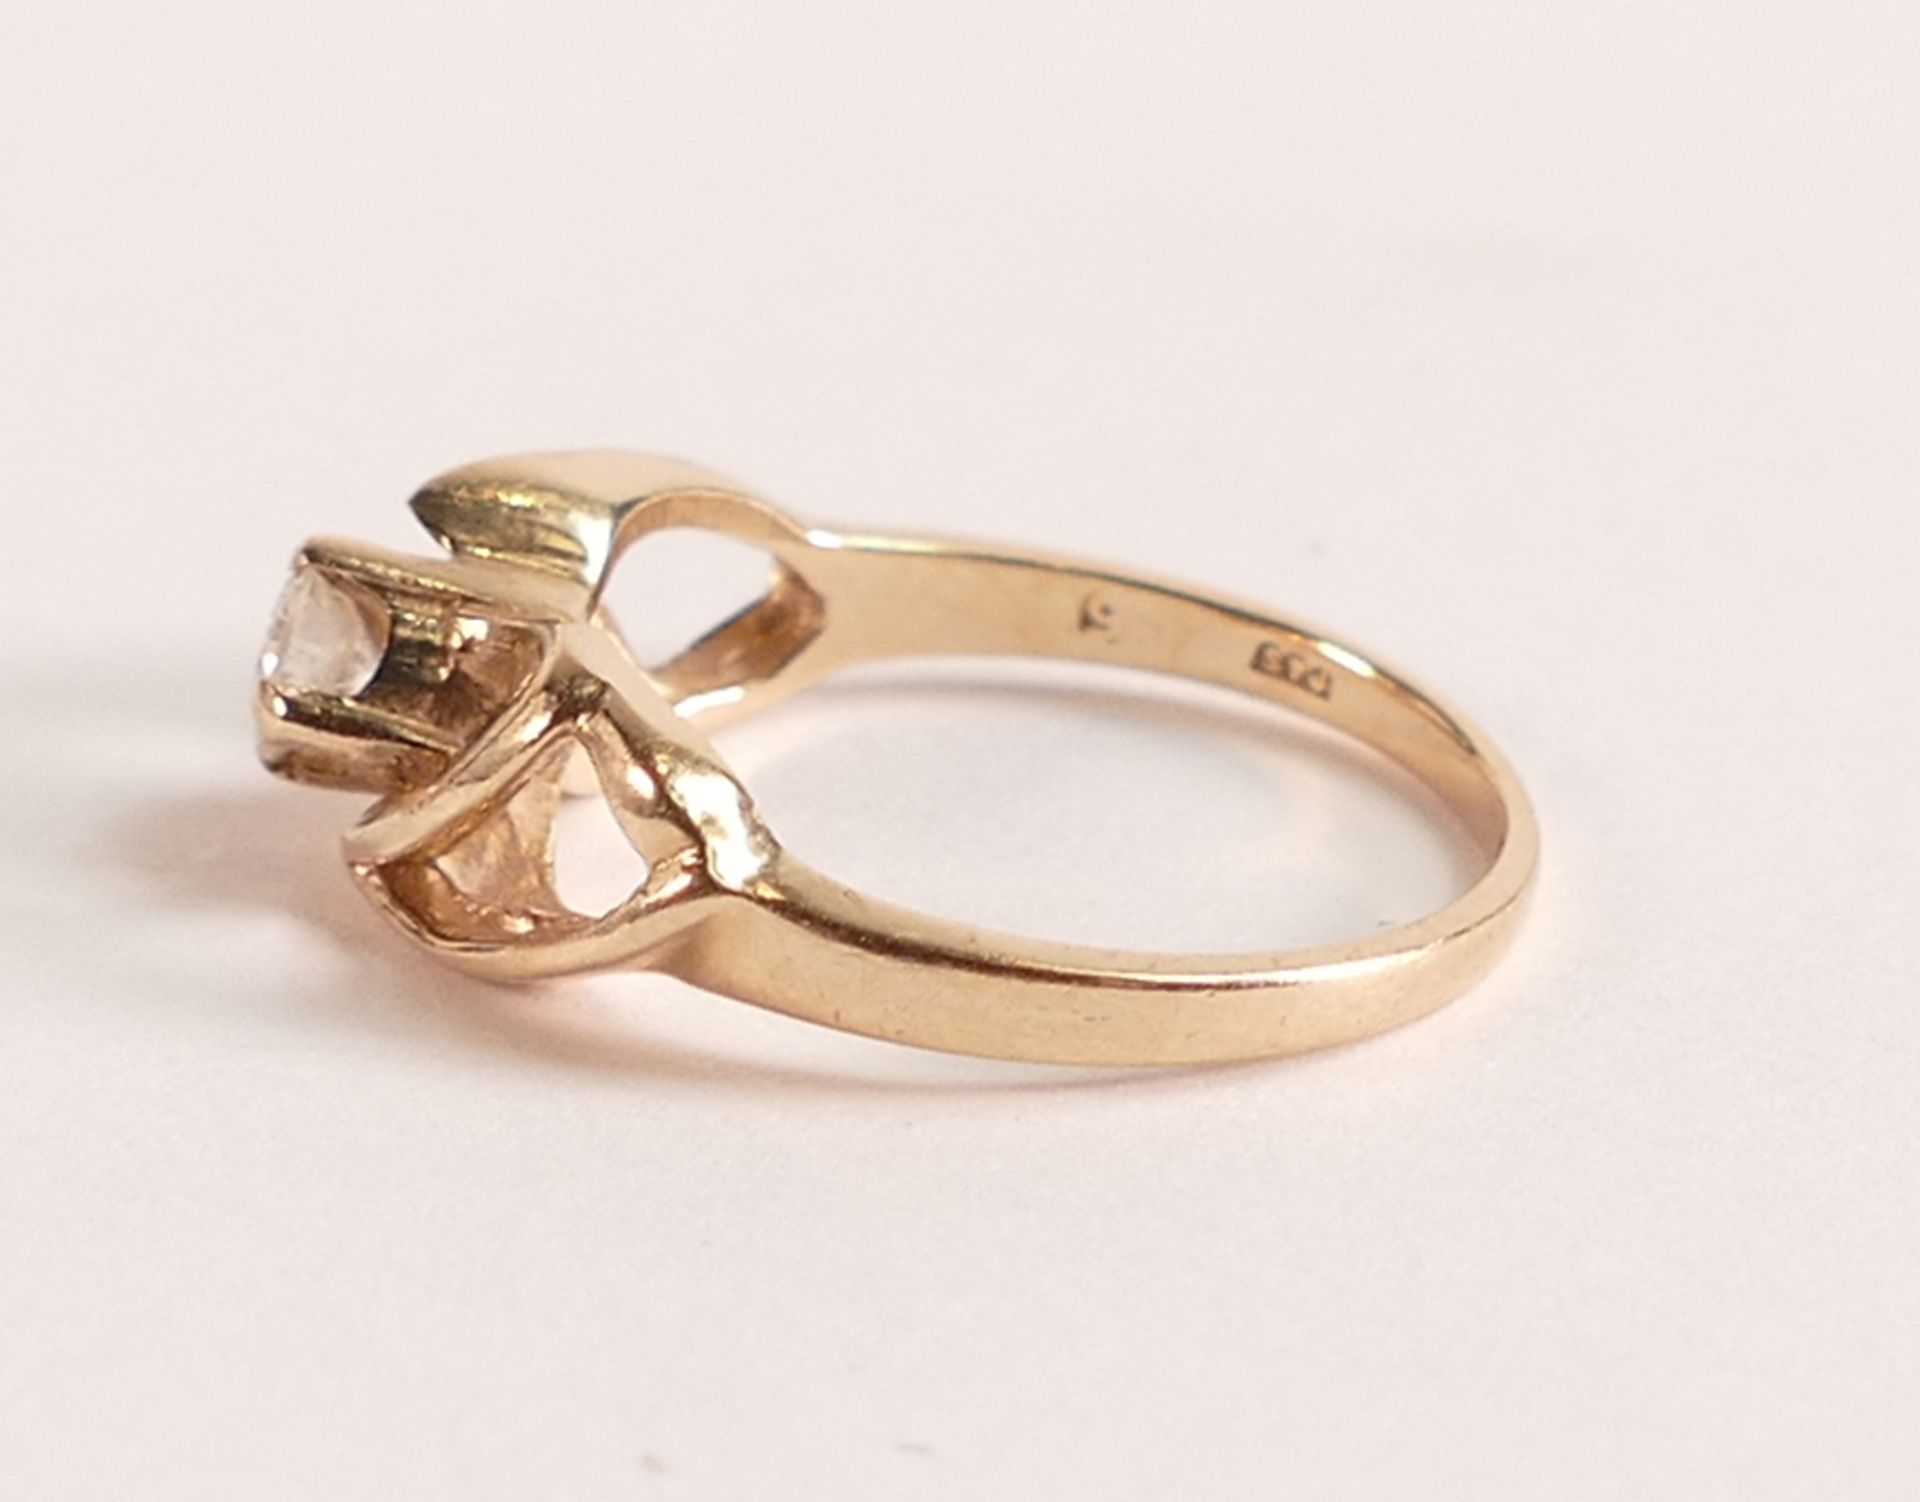 9ct yellow gold diamond ring, 1.9 grams, ring size J. - Image 2 of 3